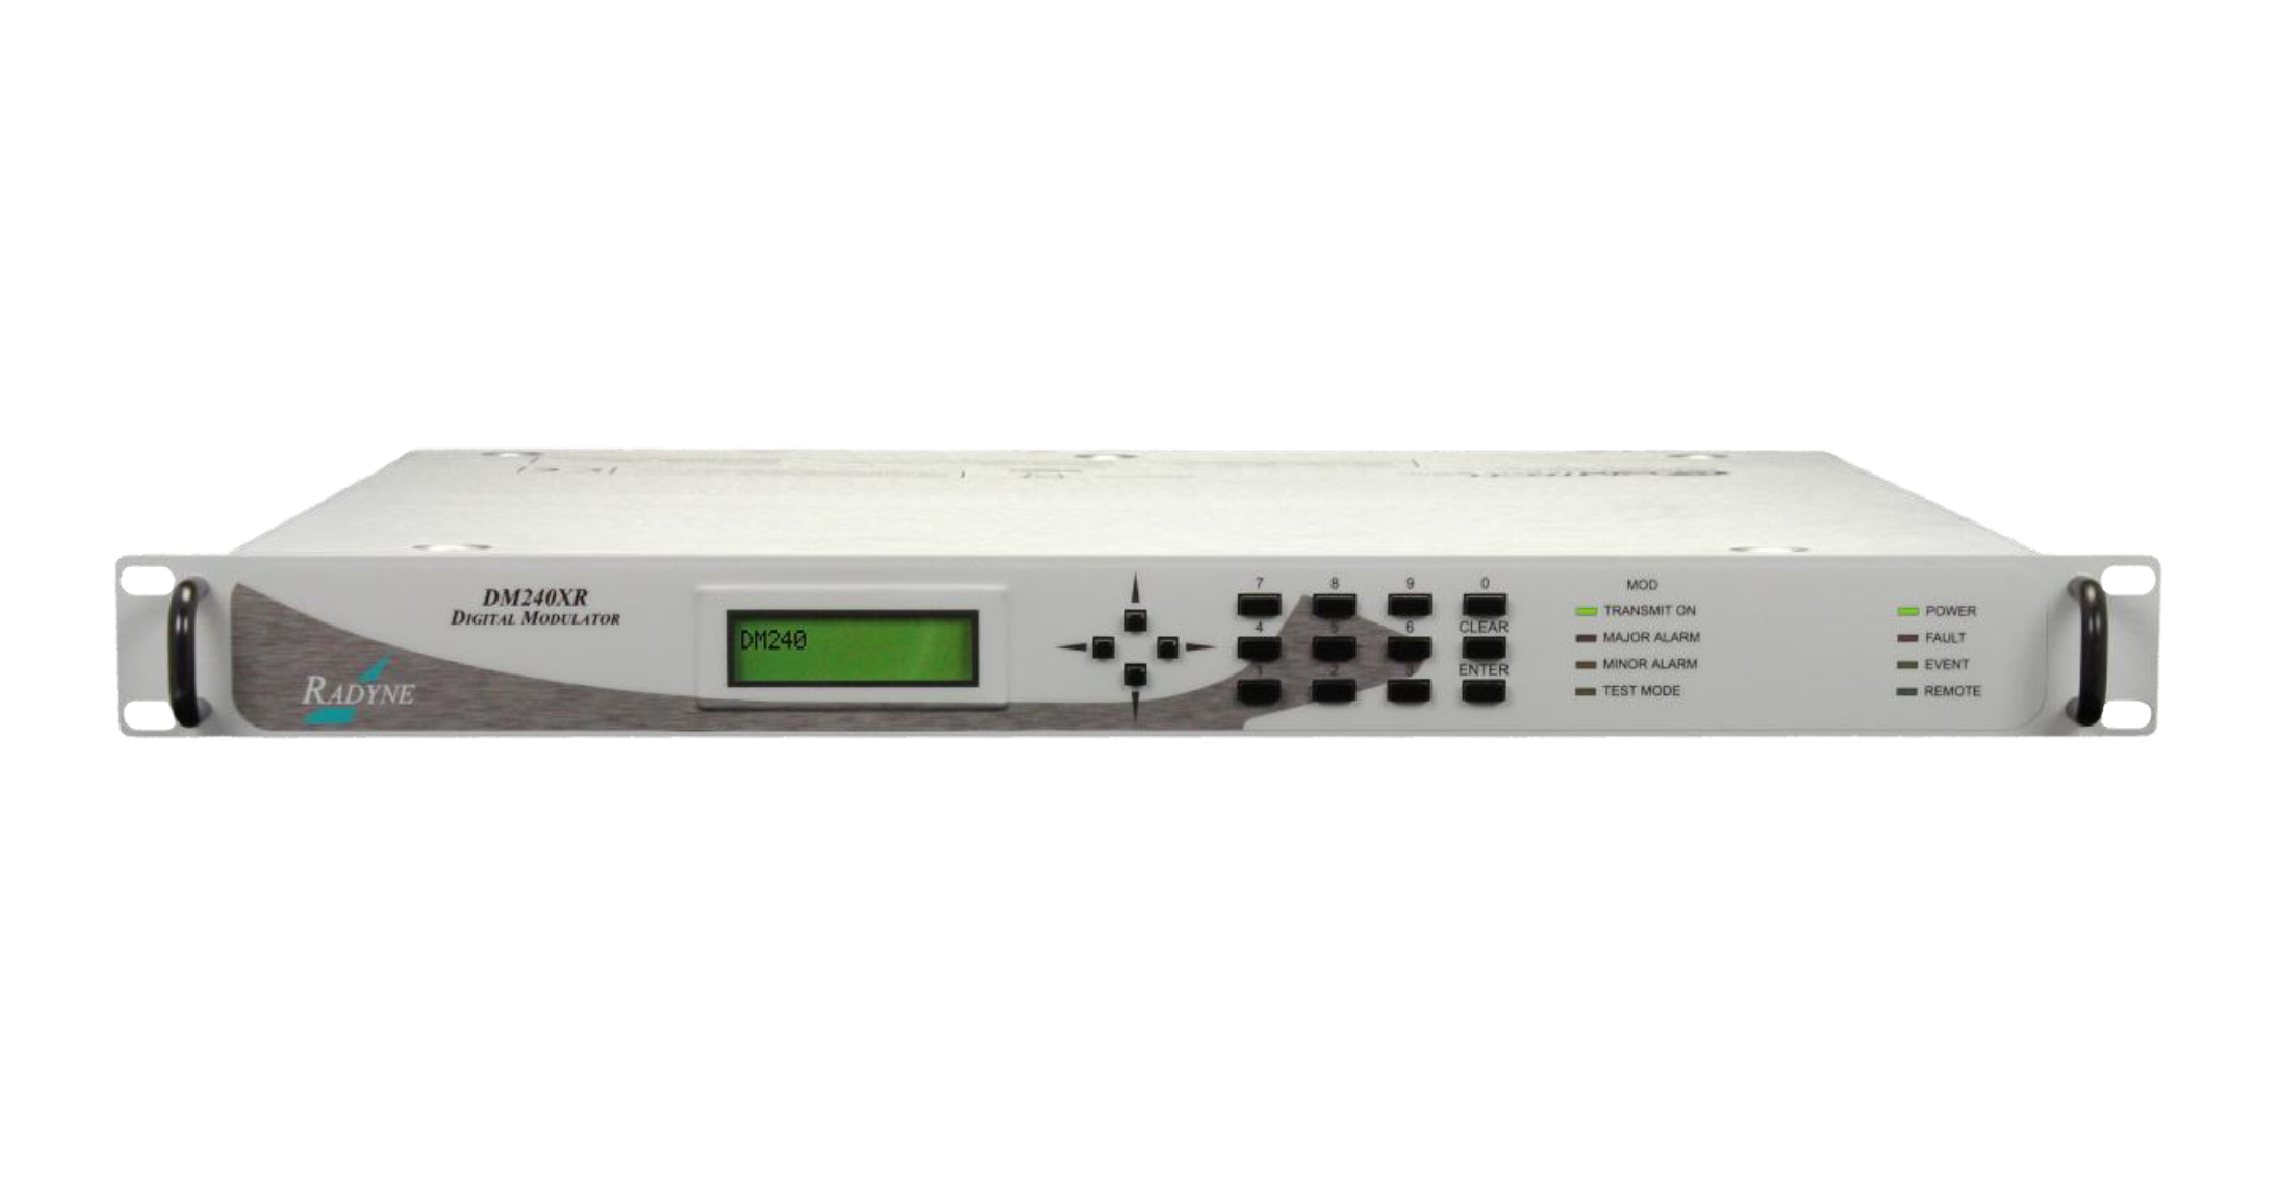 DM-240XR DVB Modulator with AutoEQ